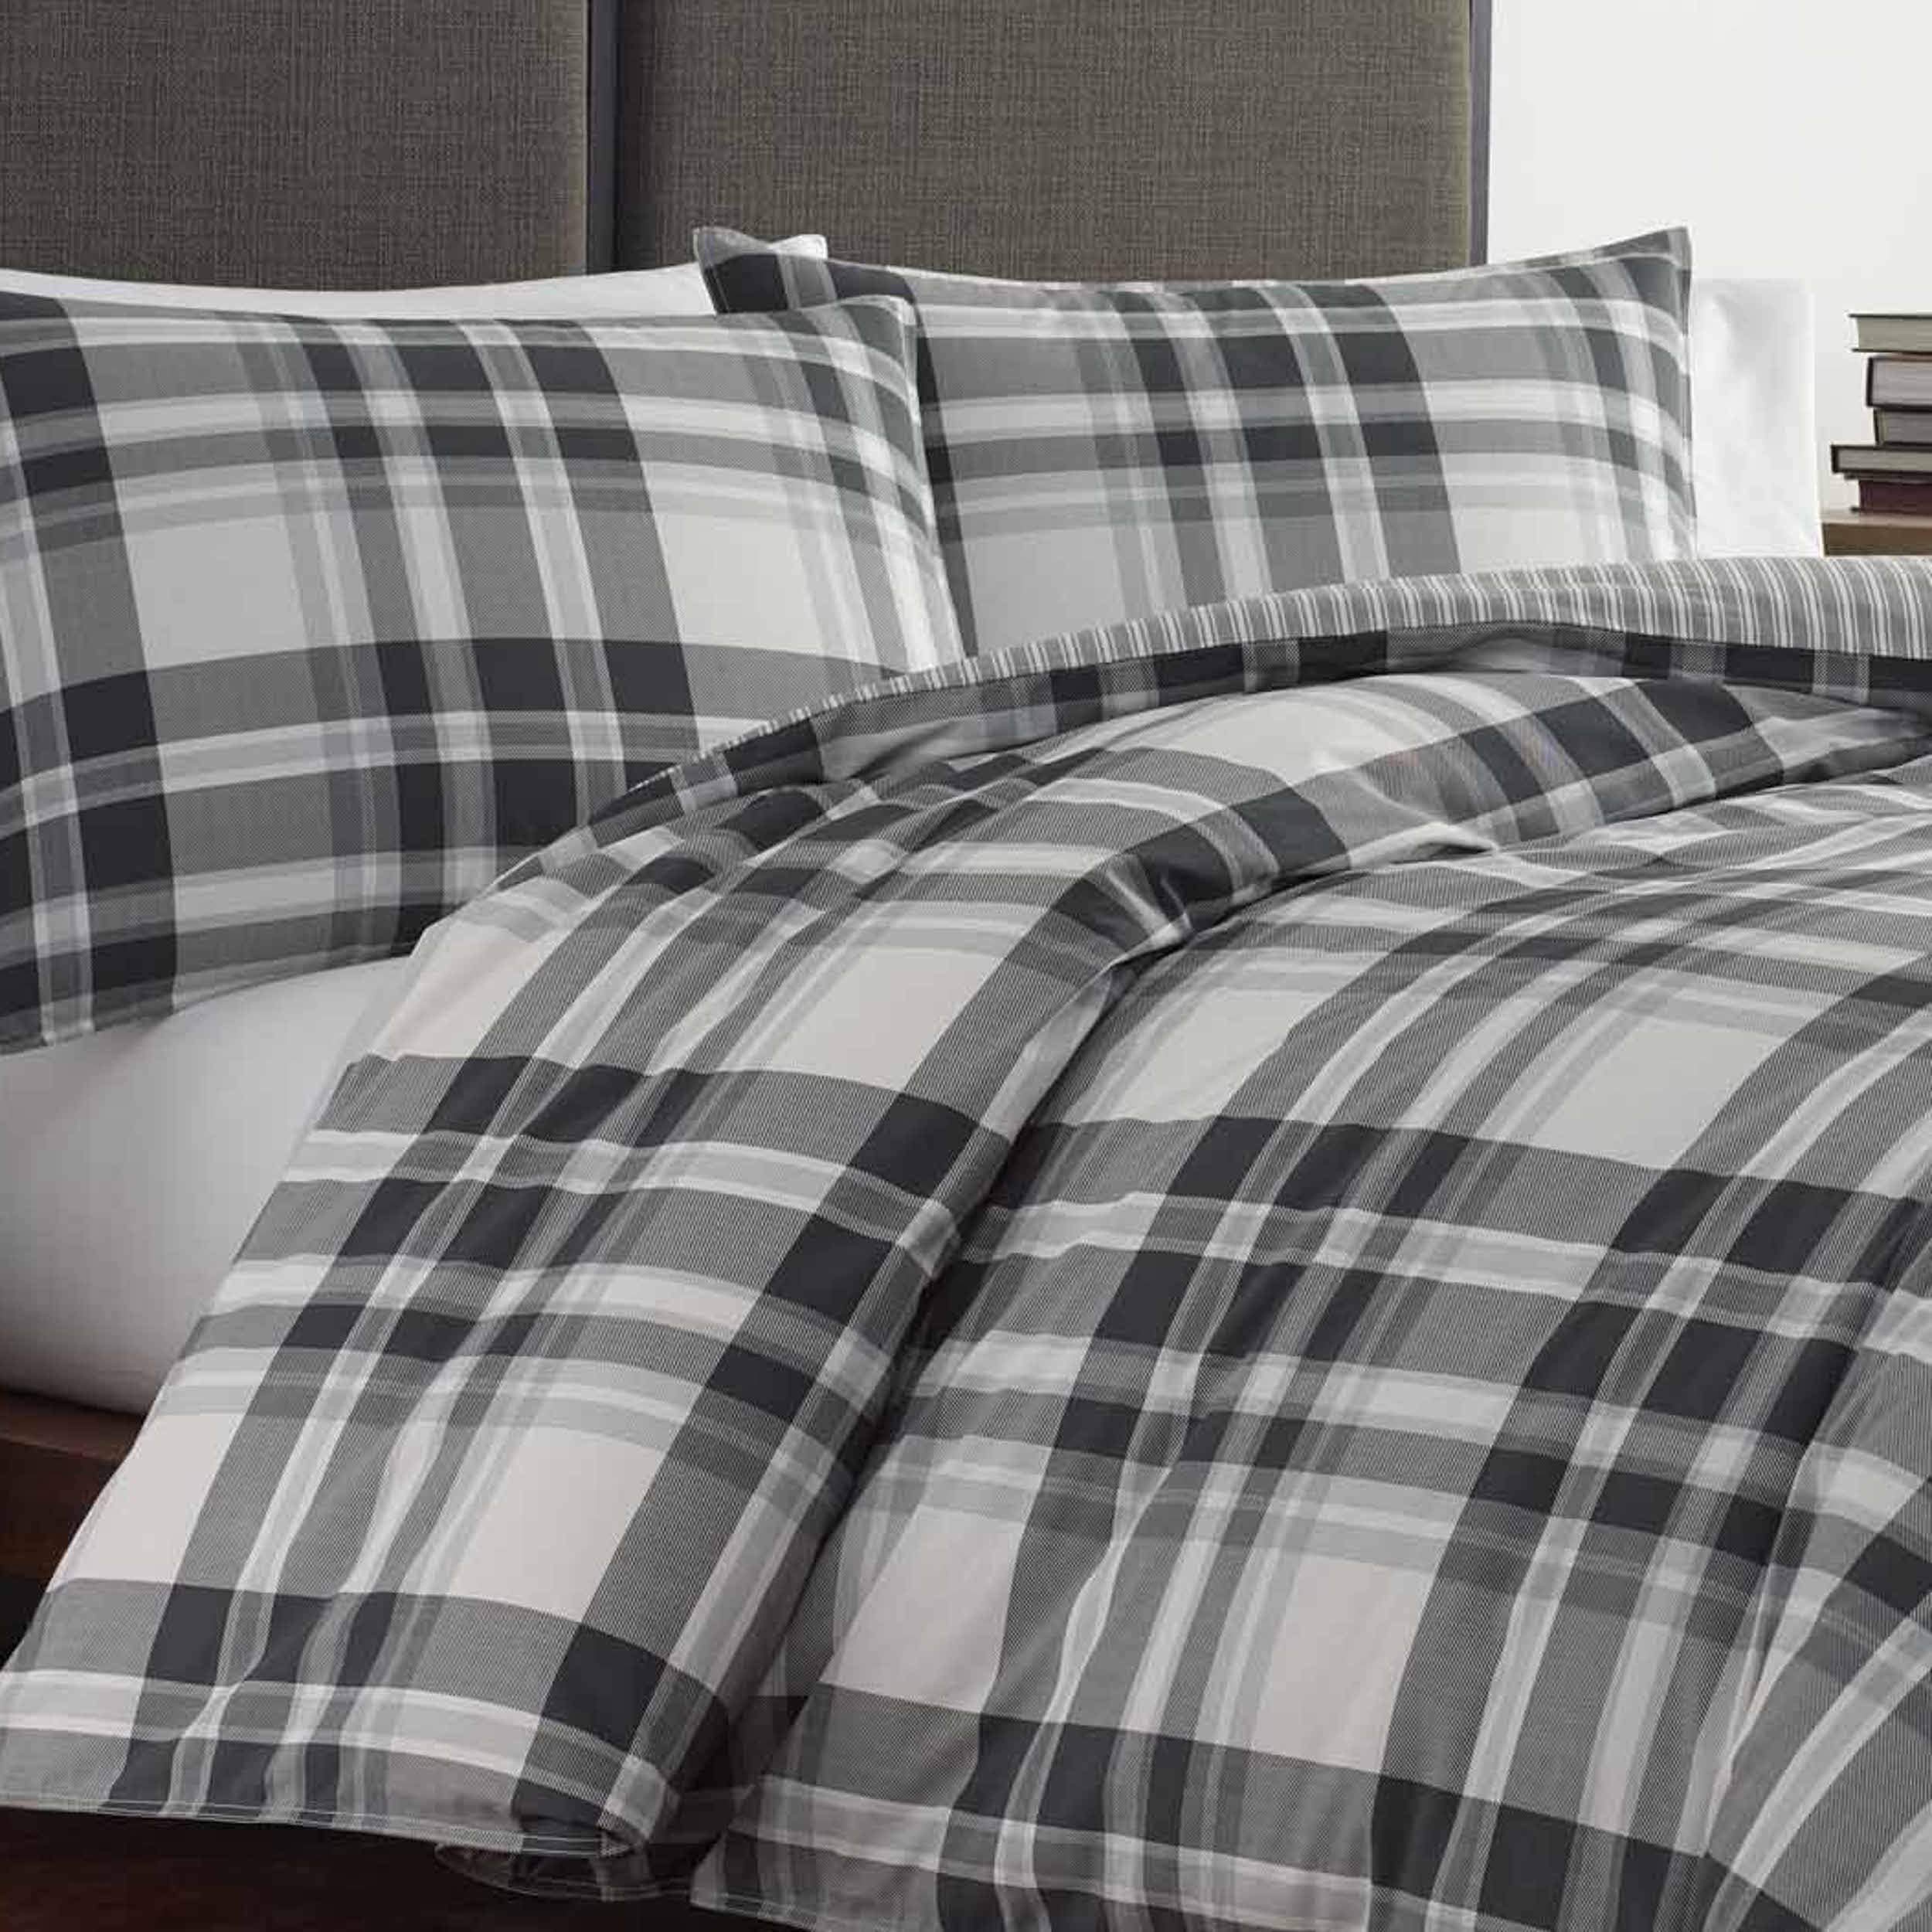 Eddie Bauer - King Comforter Set, Cotton Reversible Bedding with Matching Shams, Plaid Home Decor for All Seasons (Coal Creek Grey, King)